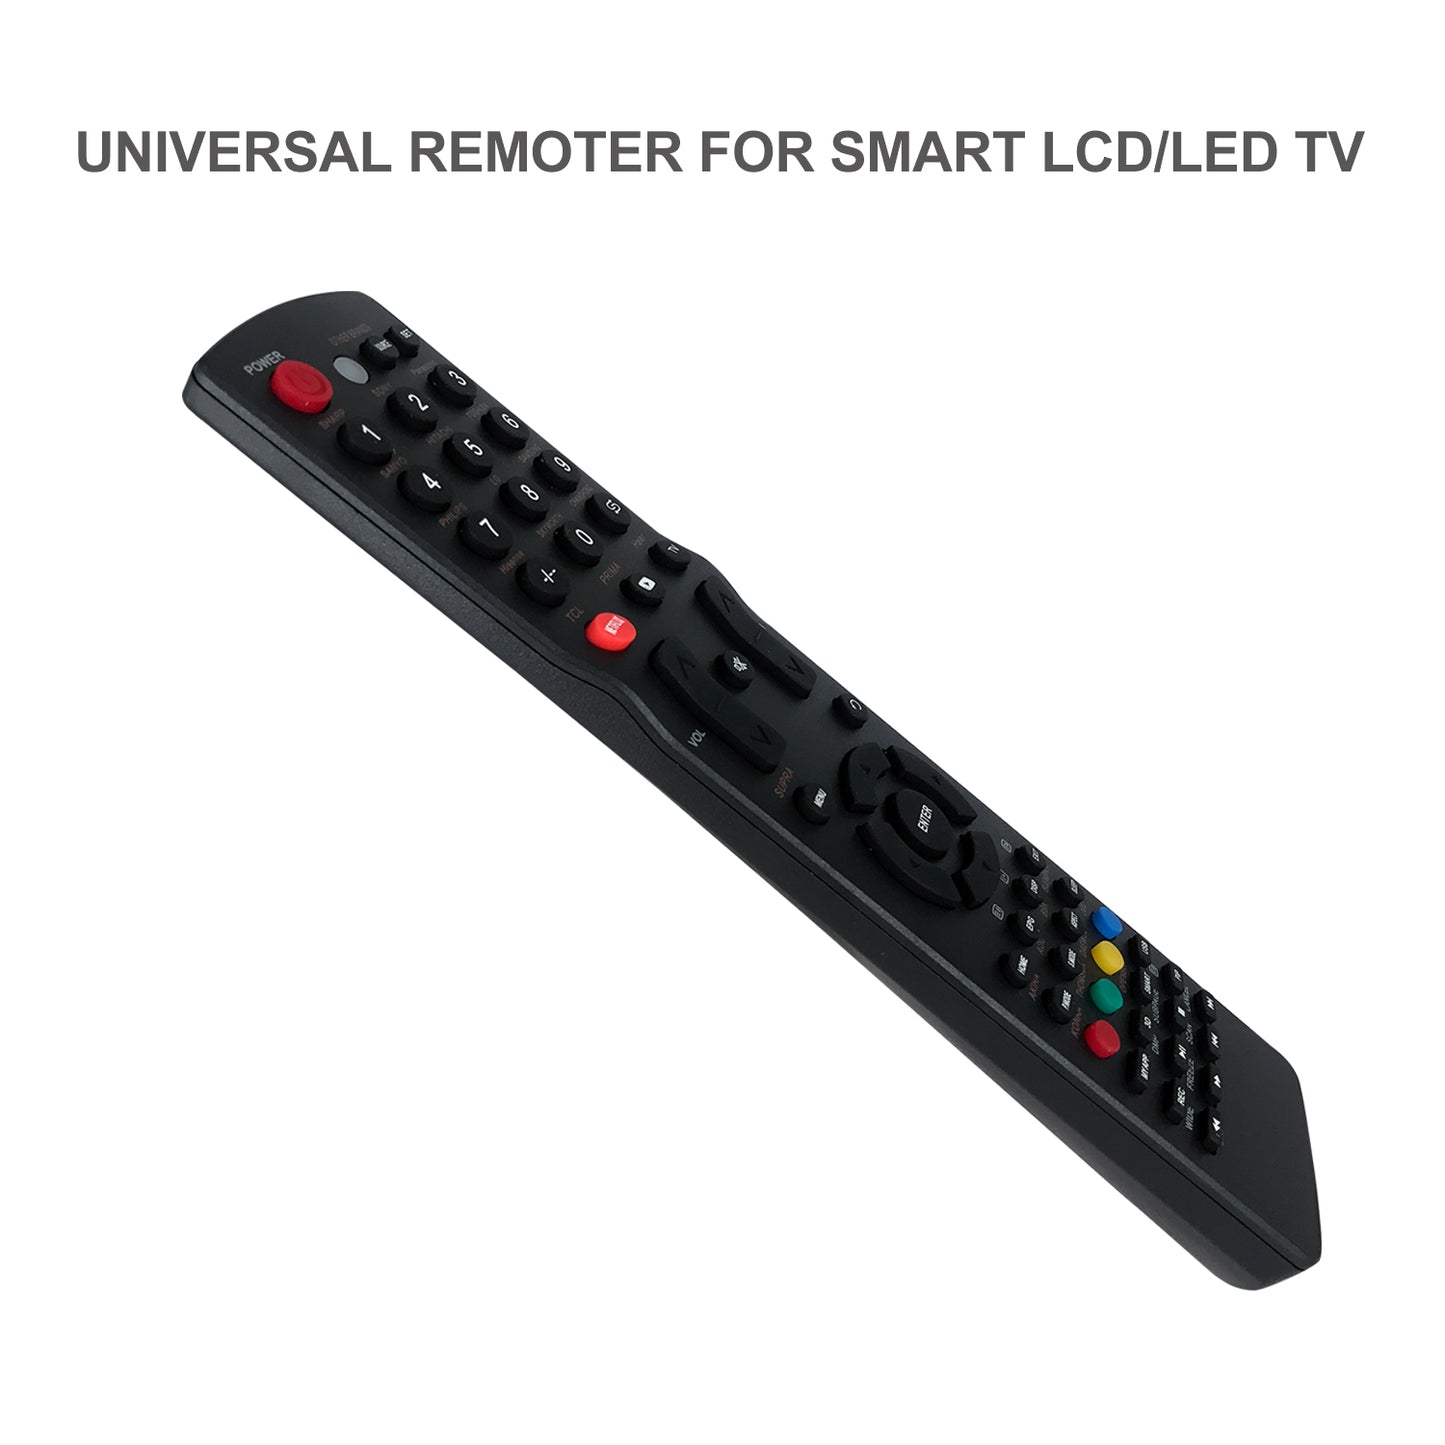 CRC1098V Universal TV Remote Control for LG, Samsung, Sony, Hisense, Panasonic, Philips, Sharp, Sanyo, Toshiba, Hitachi, TCL Smart TV and More